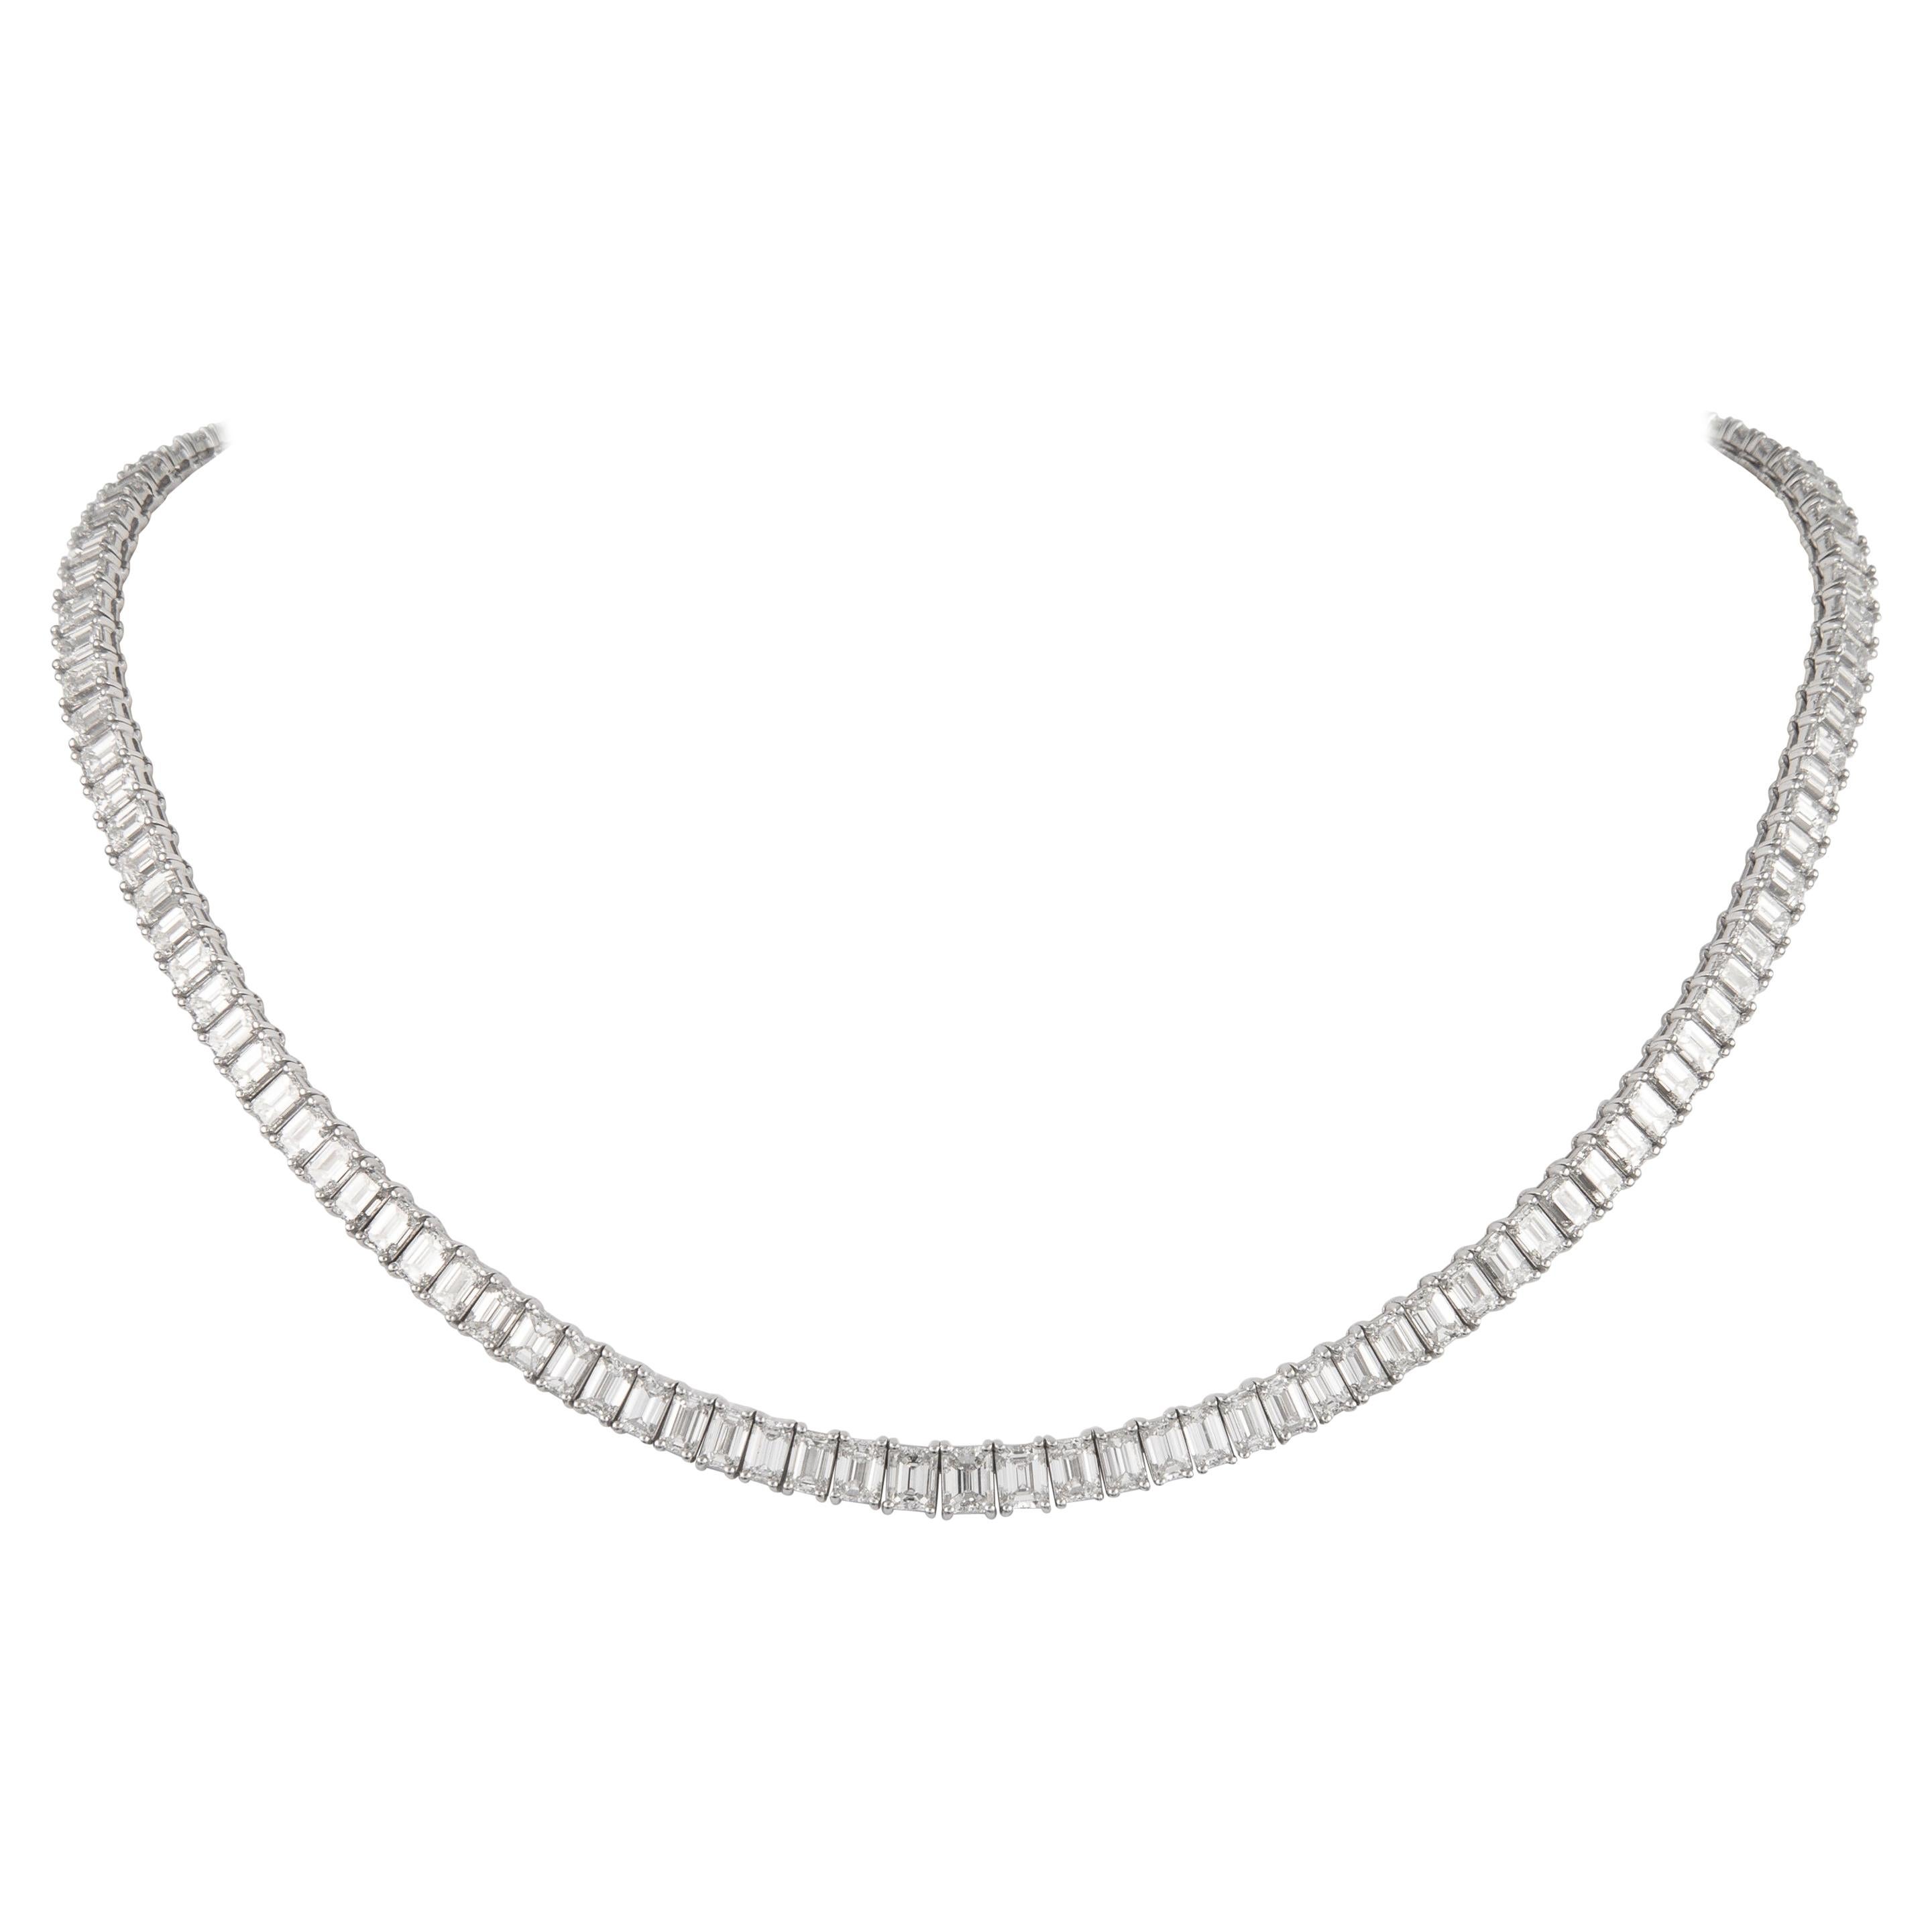 Alexander 42 Carat Emerald Cut Diamond Tennis Necklace 18 Karat White Gold